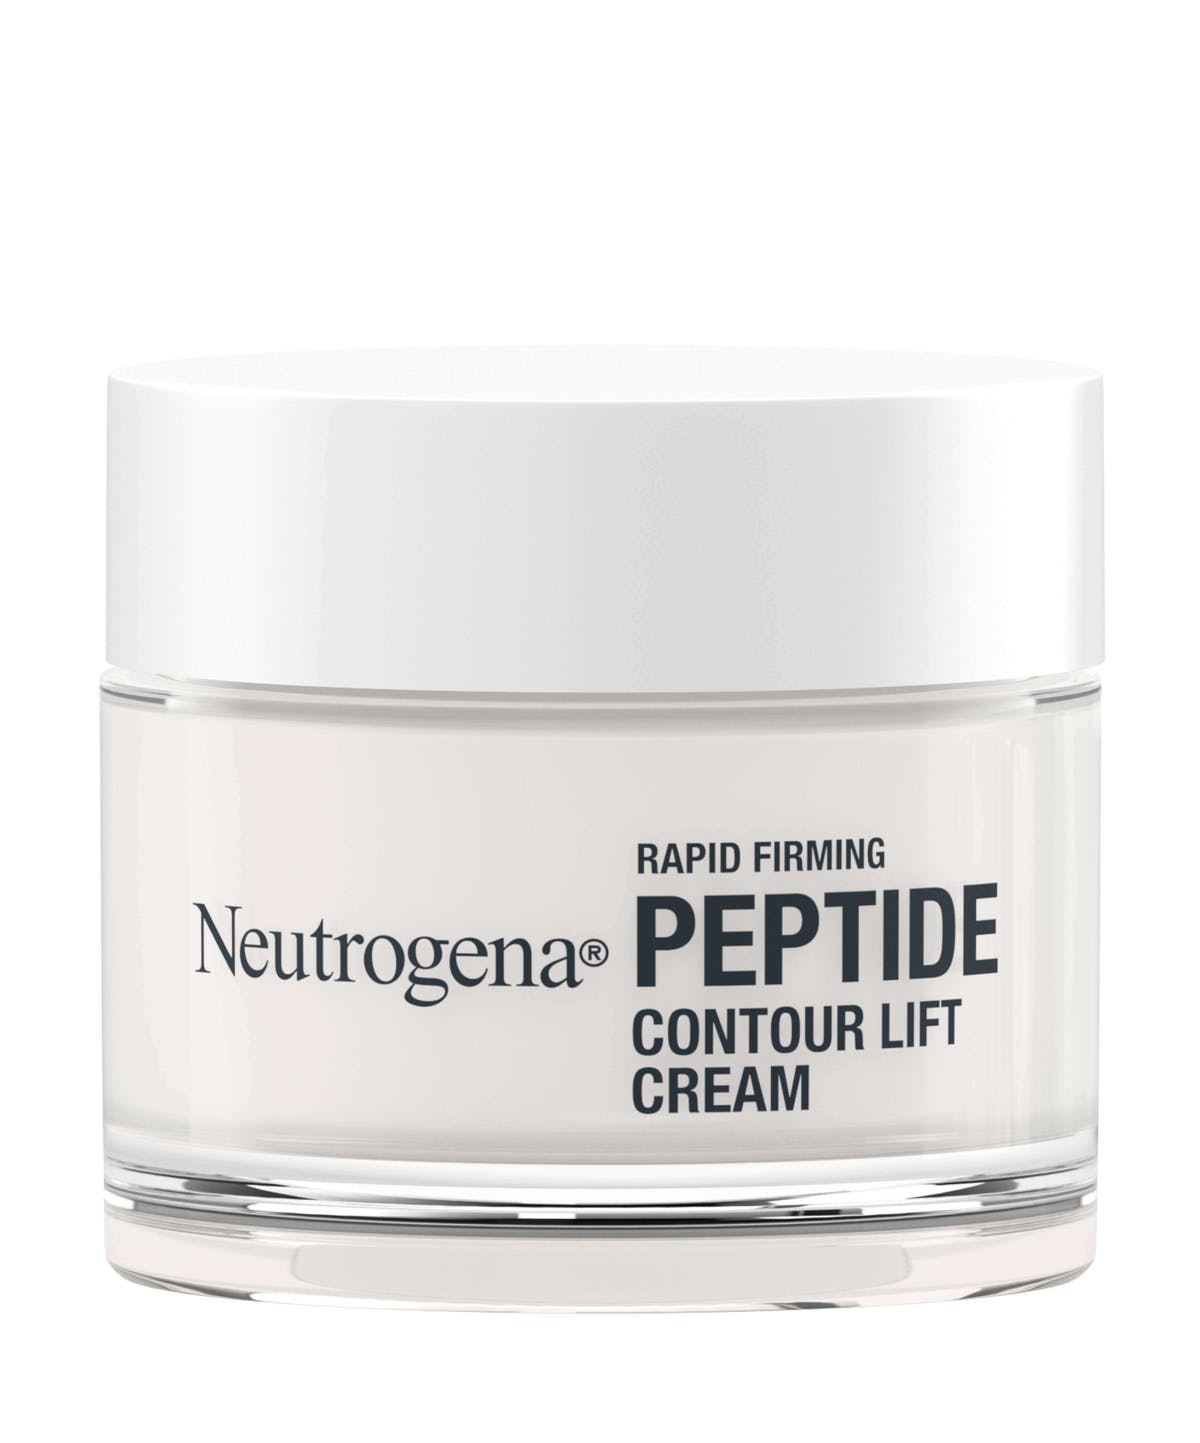 Neutrogena Rapid Firming Peptide Contour Lift Face Cream